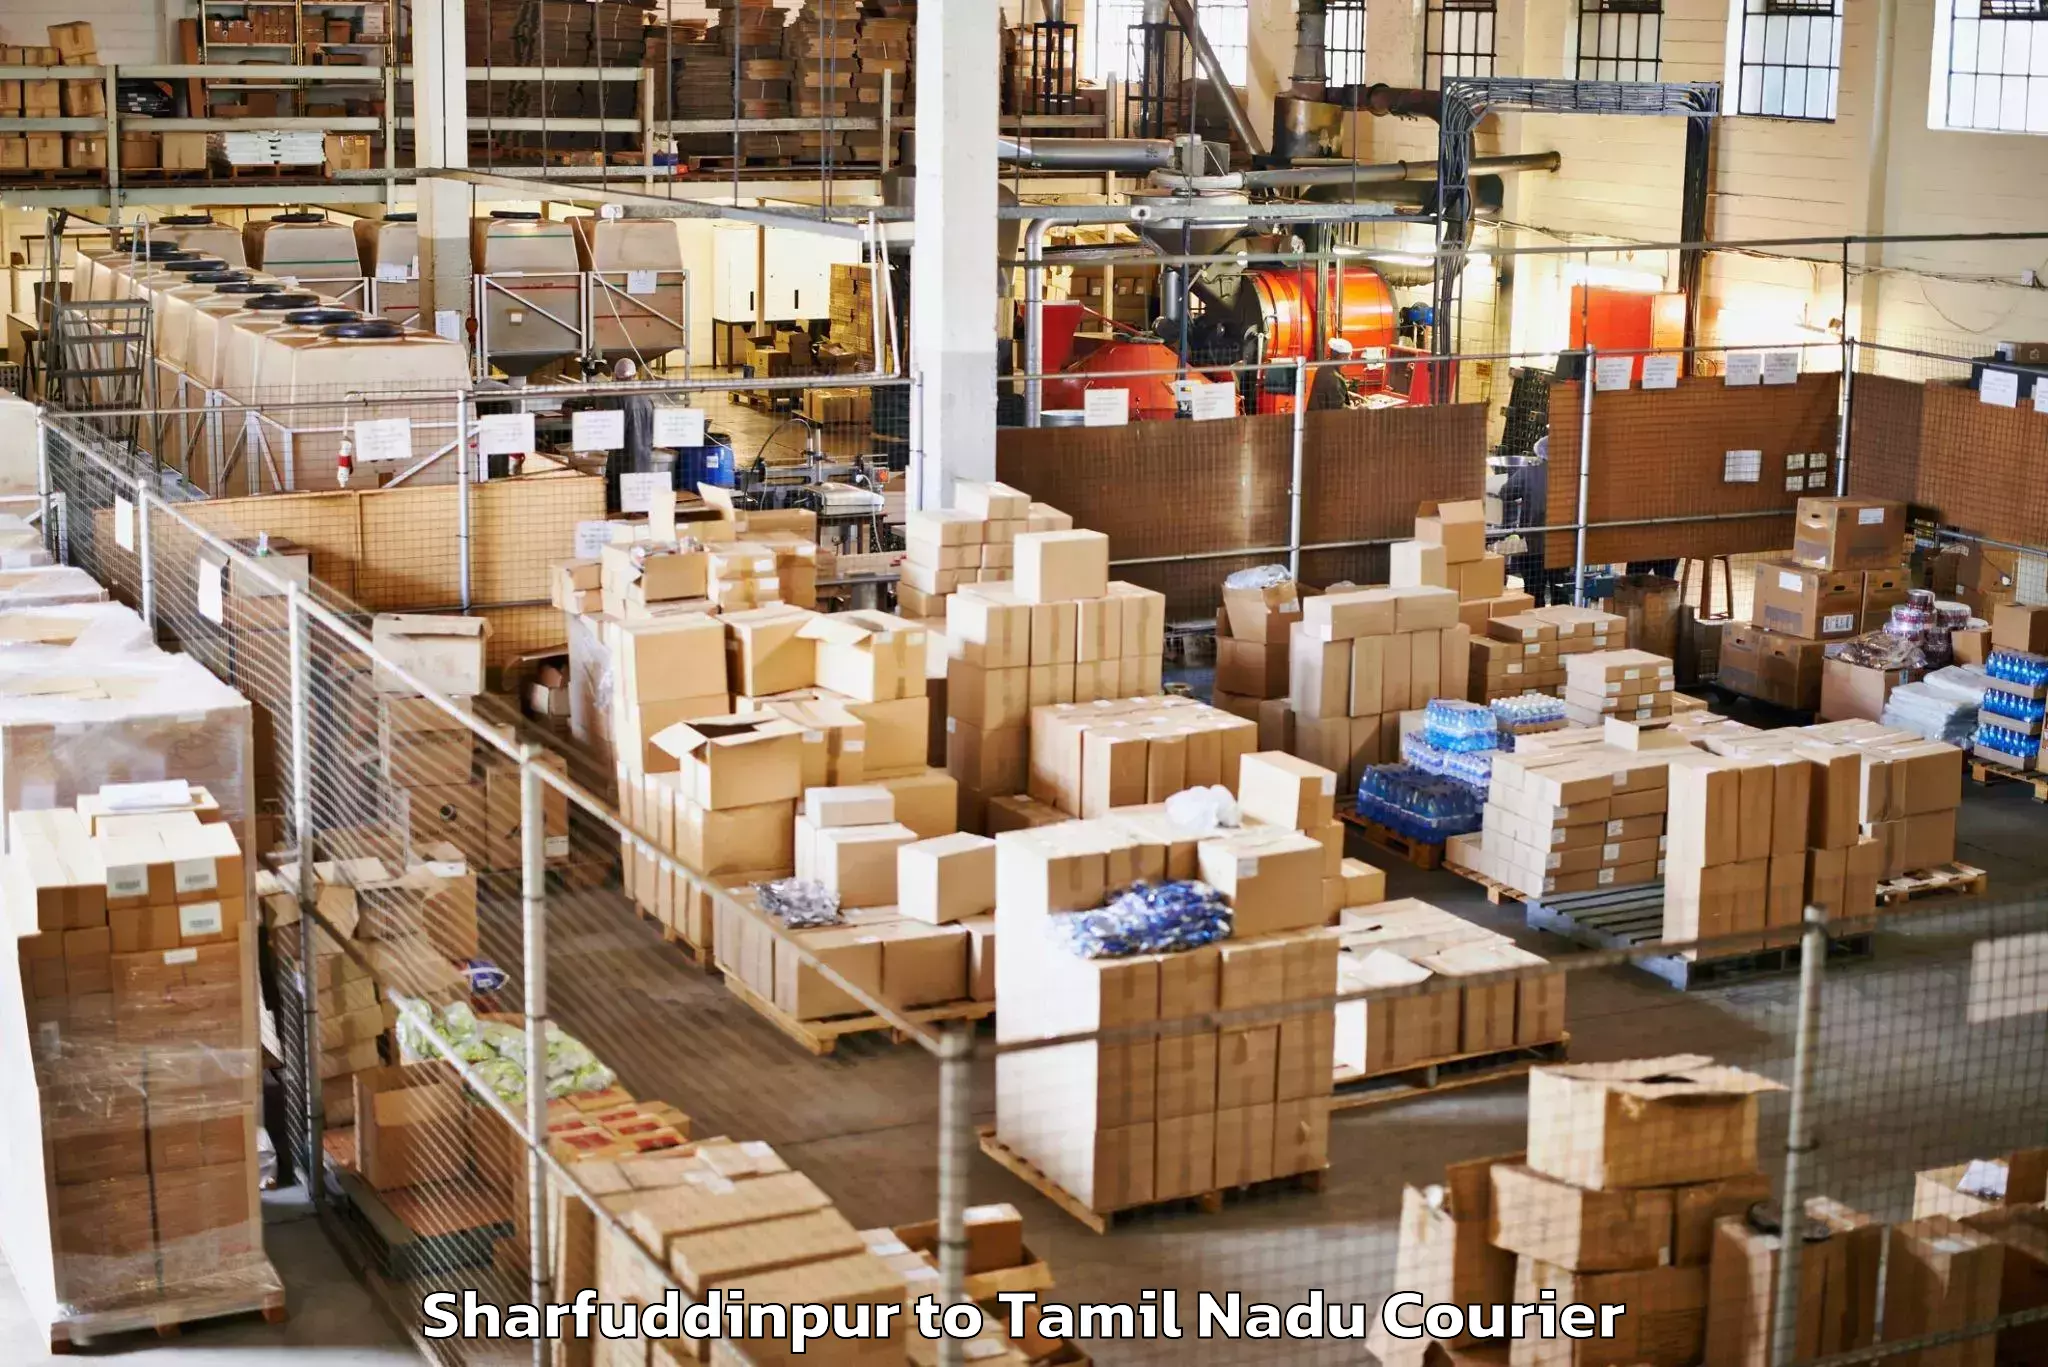 Luggage shipping guide Sharfuddinpur to Sholinghur